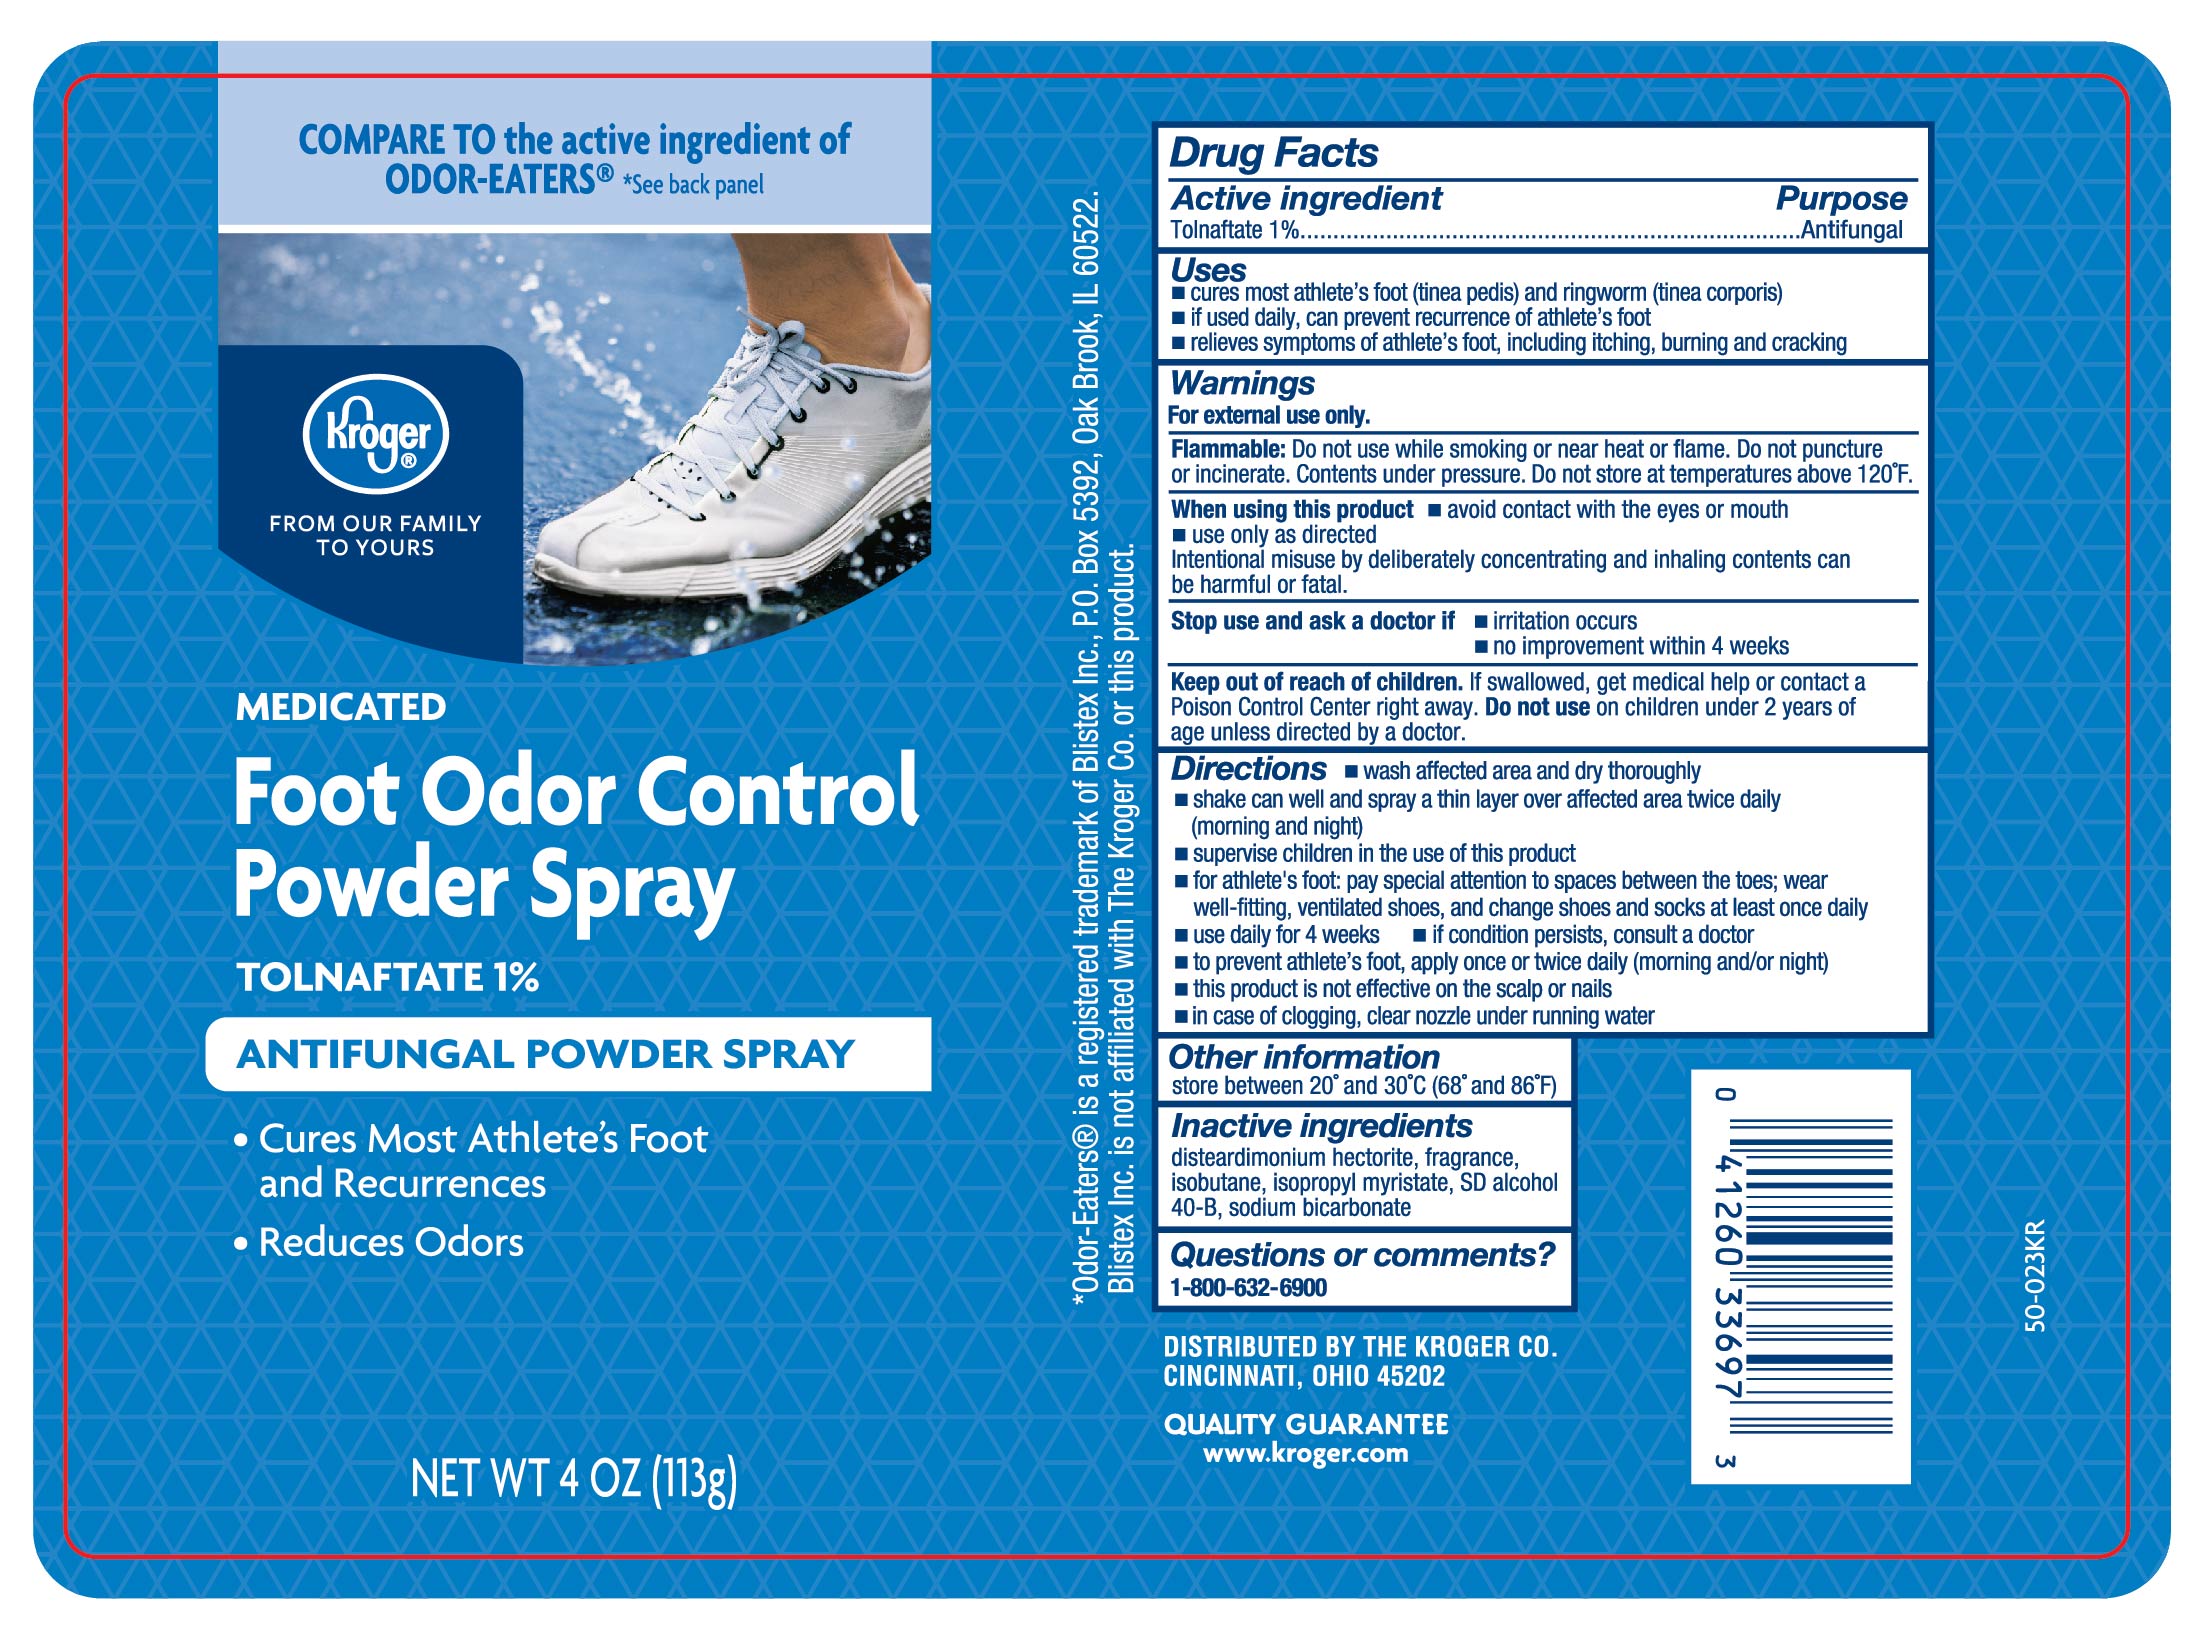 KROGER_Foot Odor Control Powder Spray.jpg